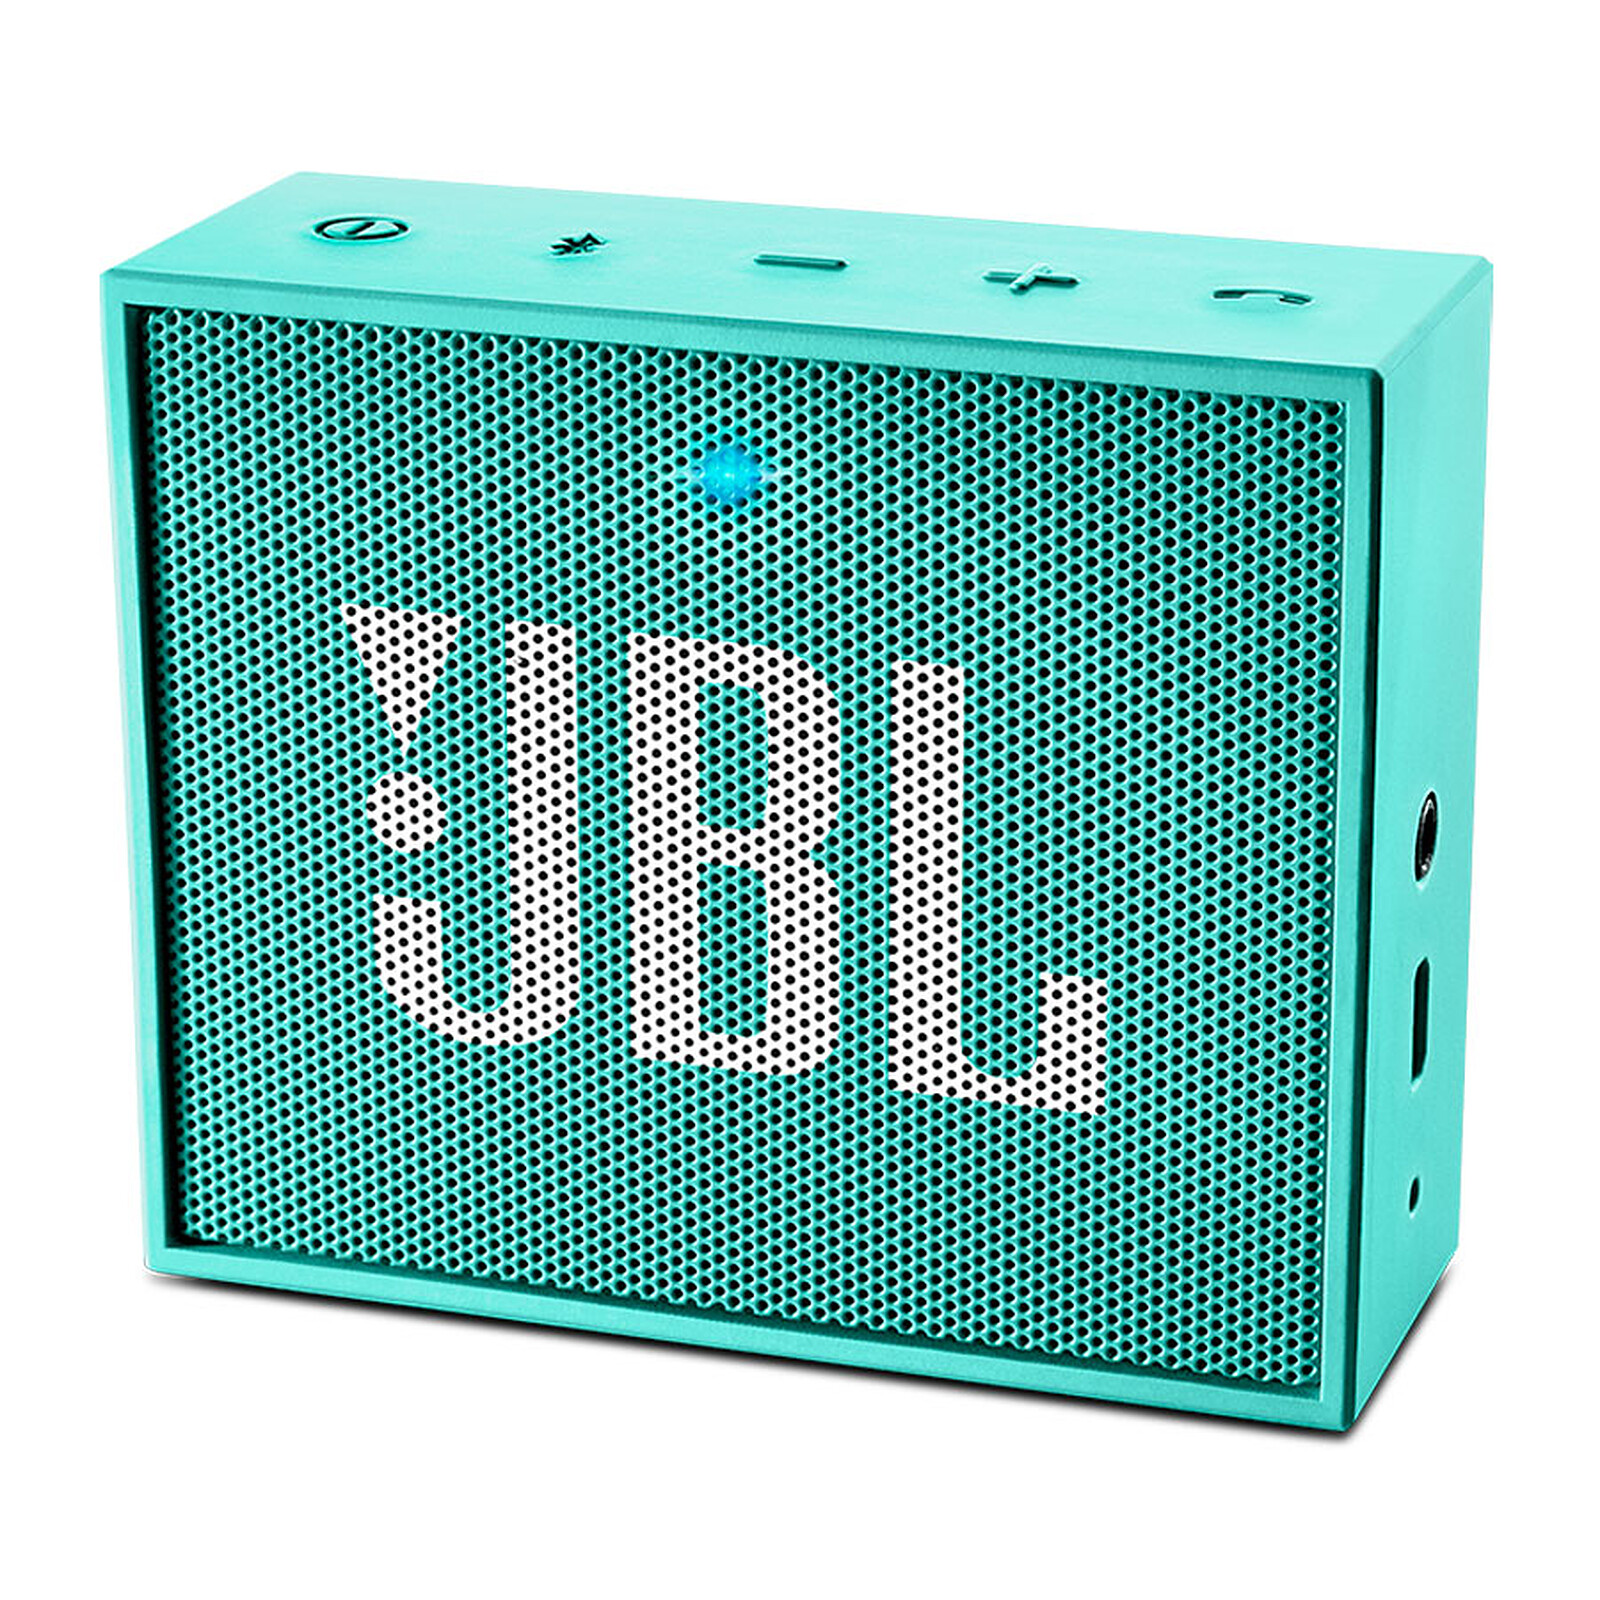 JBL GO Essential Rojo - Altavoz Bluetooth - LDLC